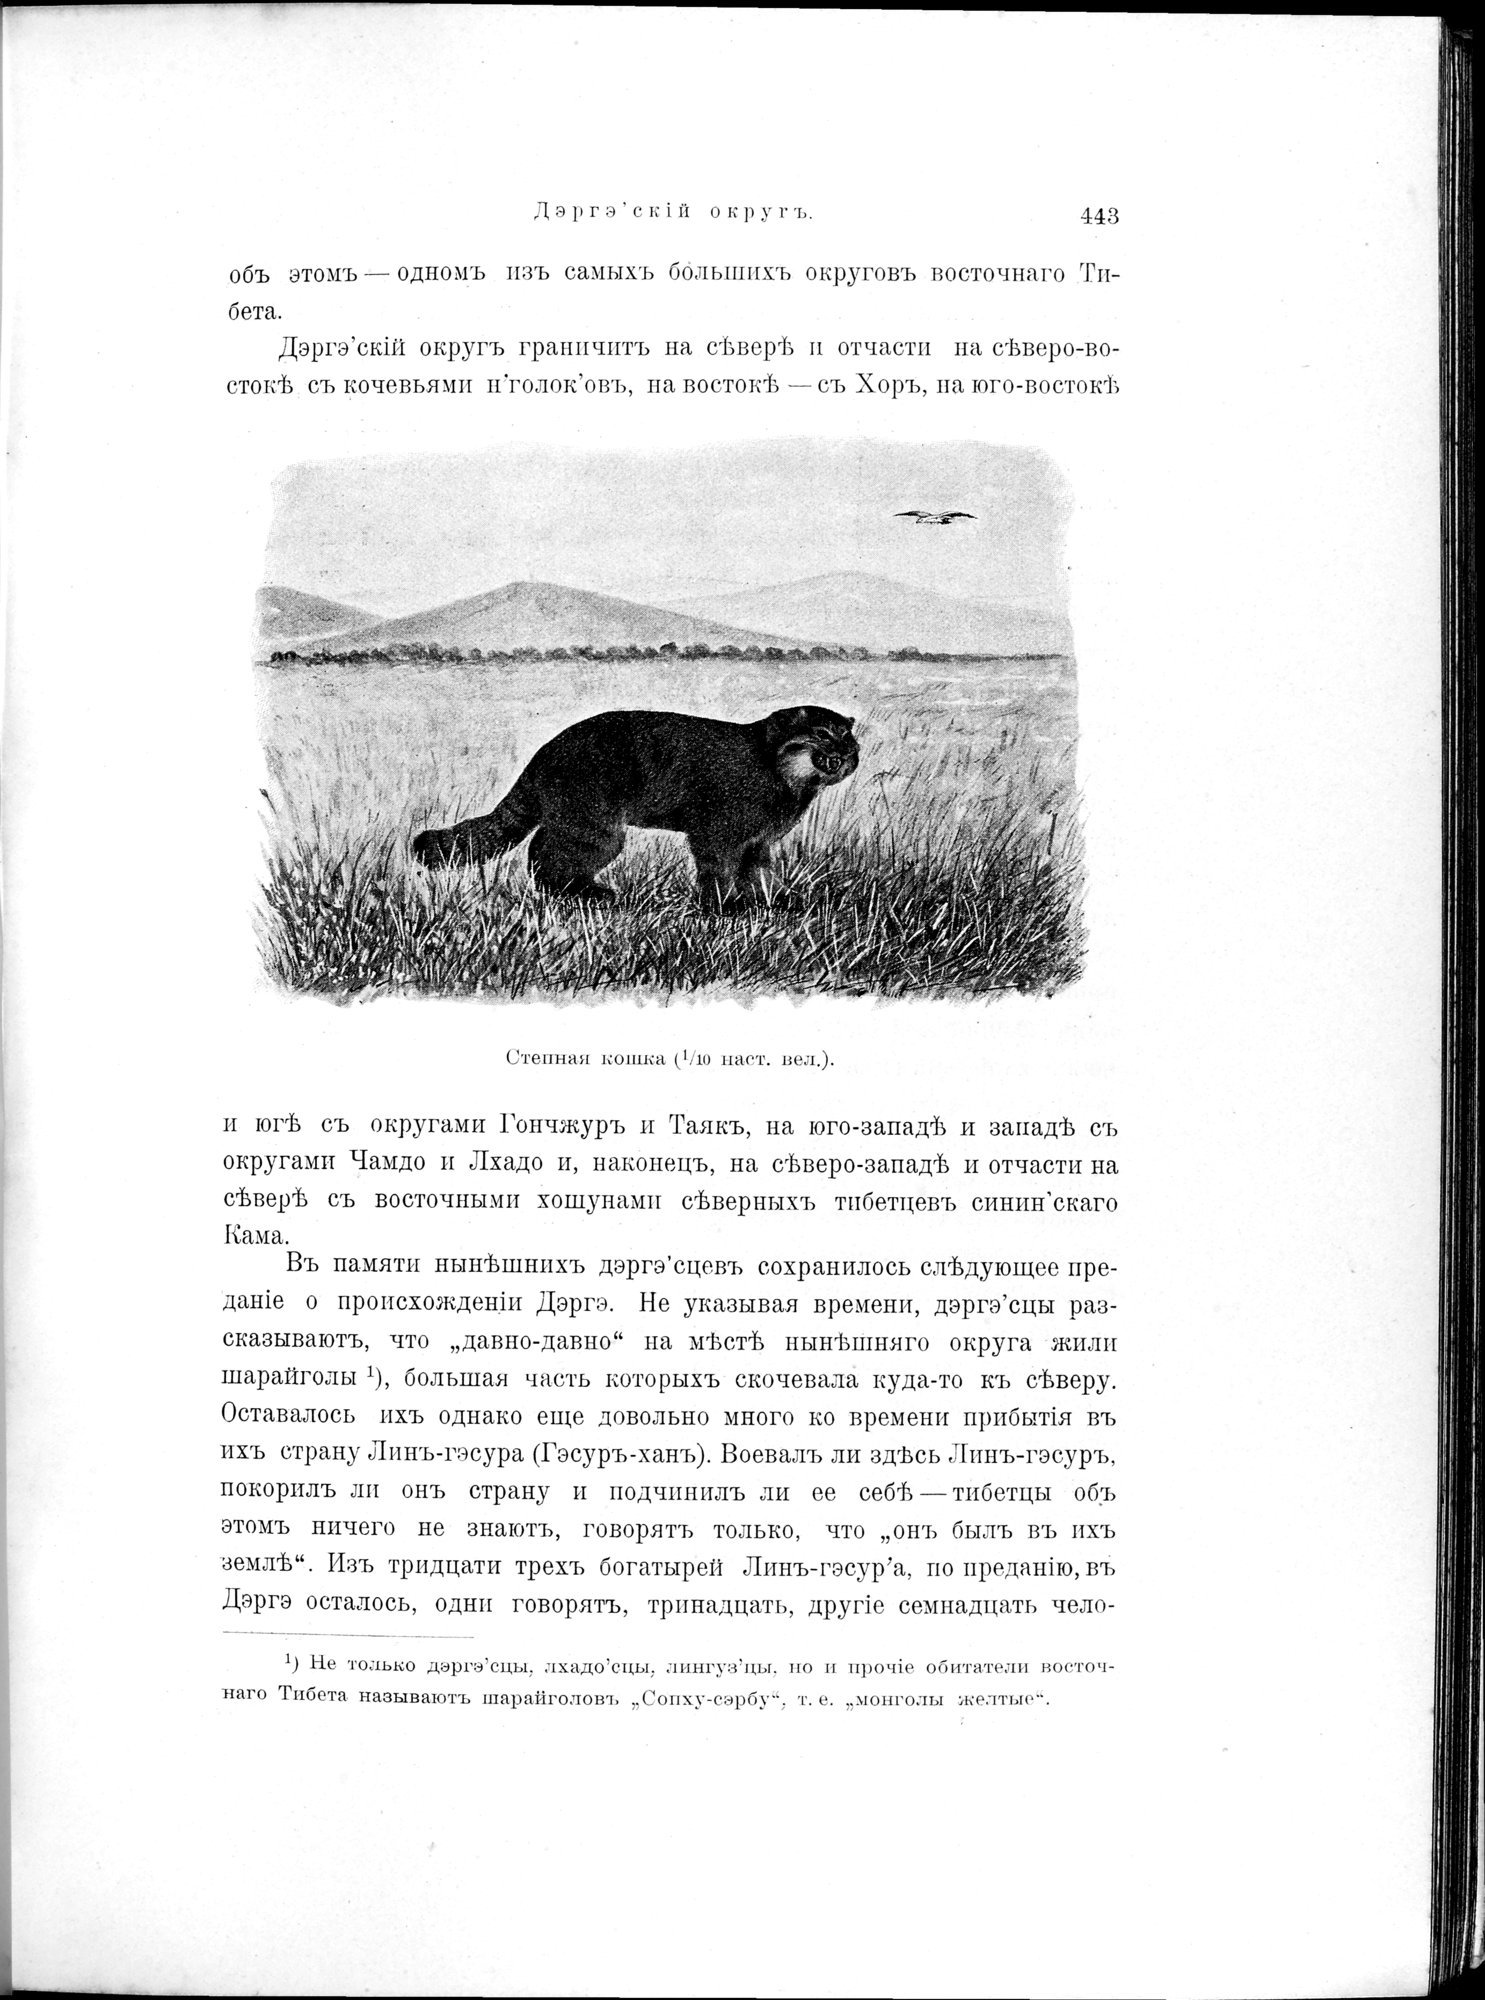 Mongoliia i Kam : vol.2 / Page 243 (Grayscale High Resolution Image)